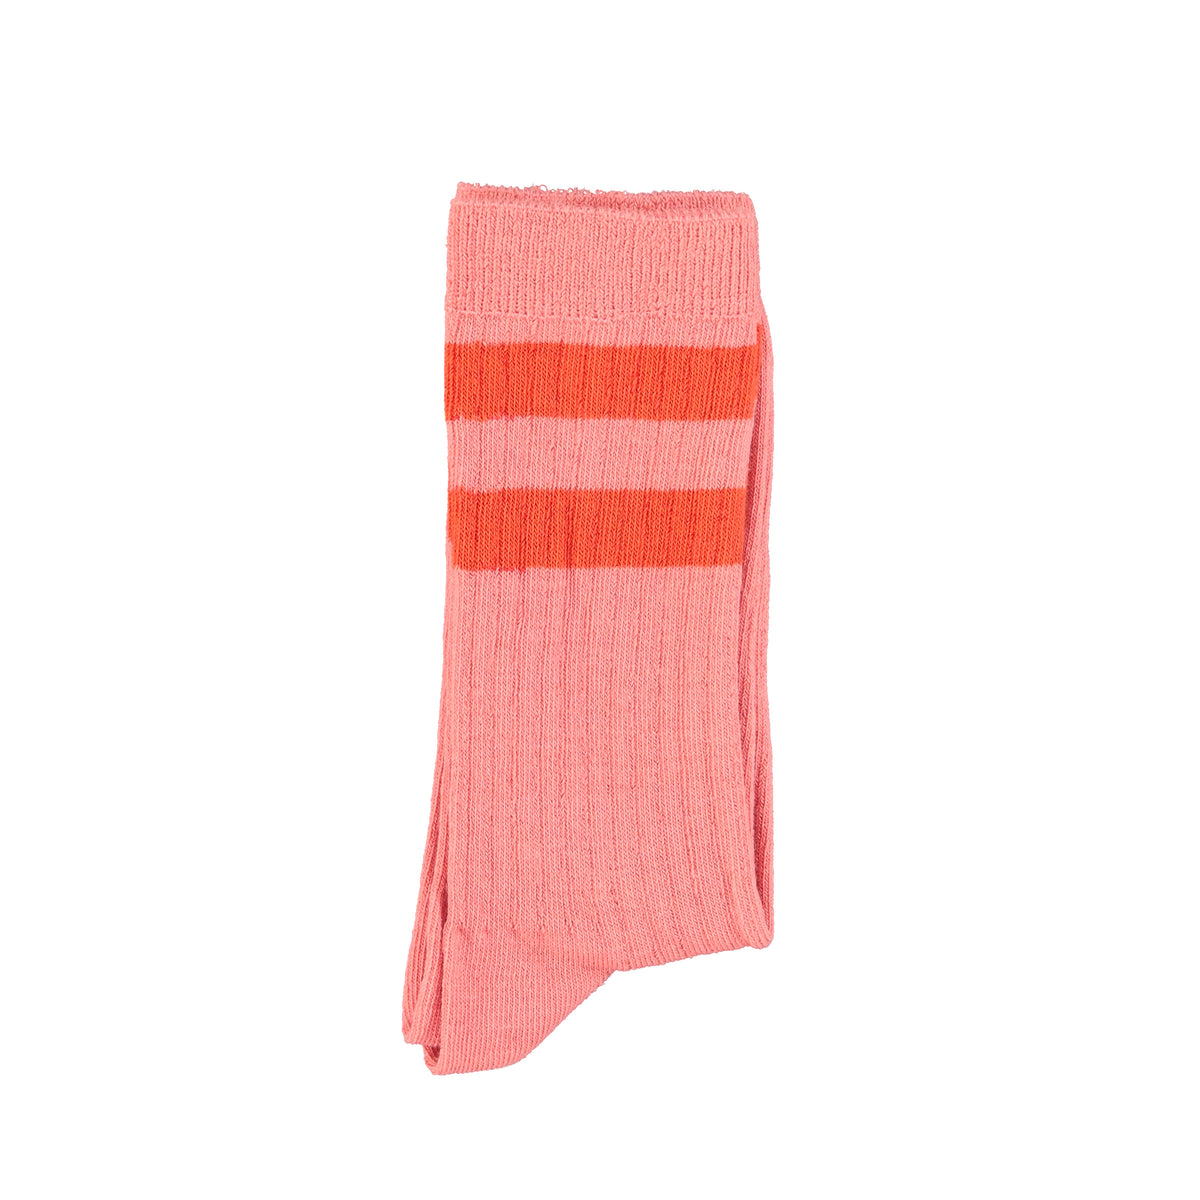 Piupiuchick Socken - orange/pink